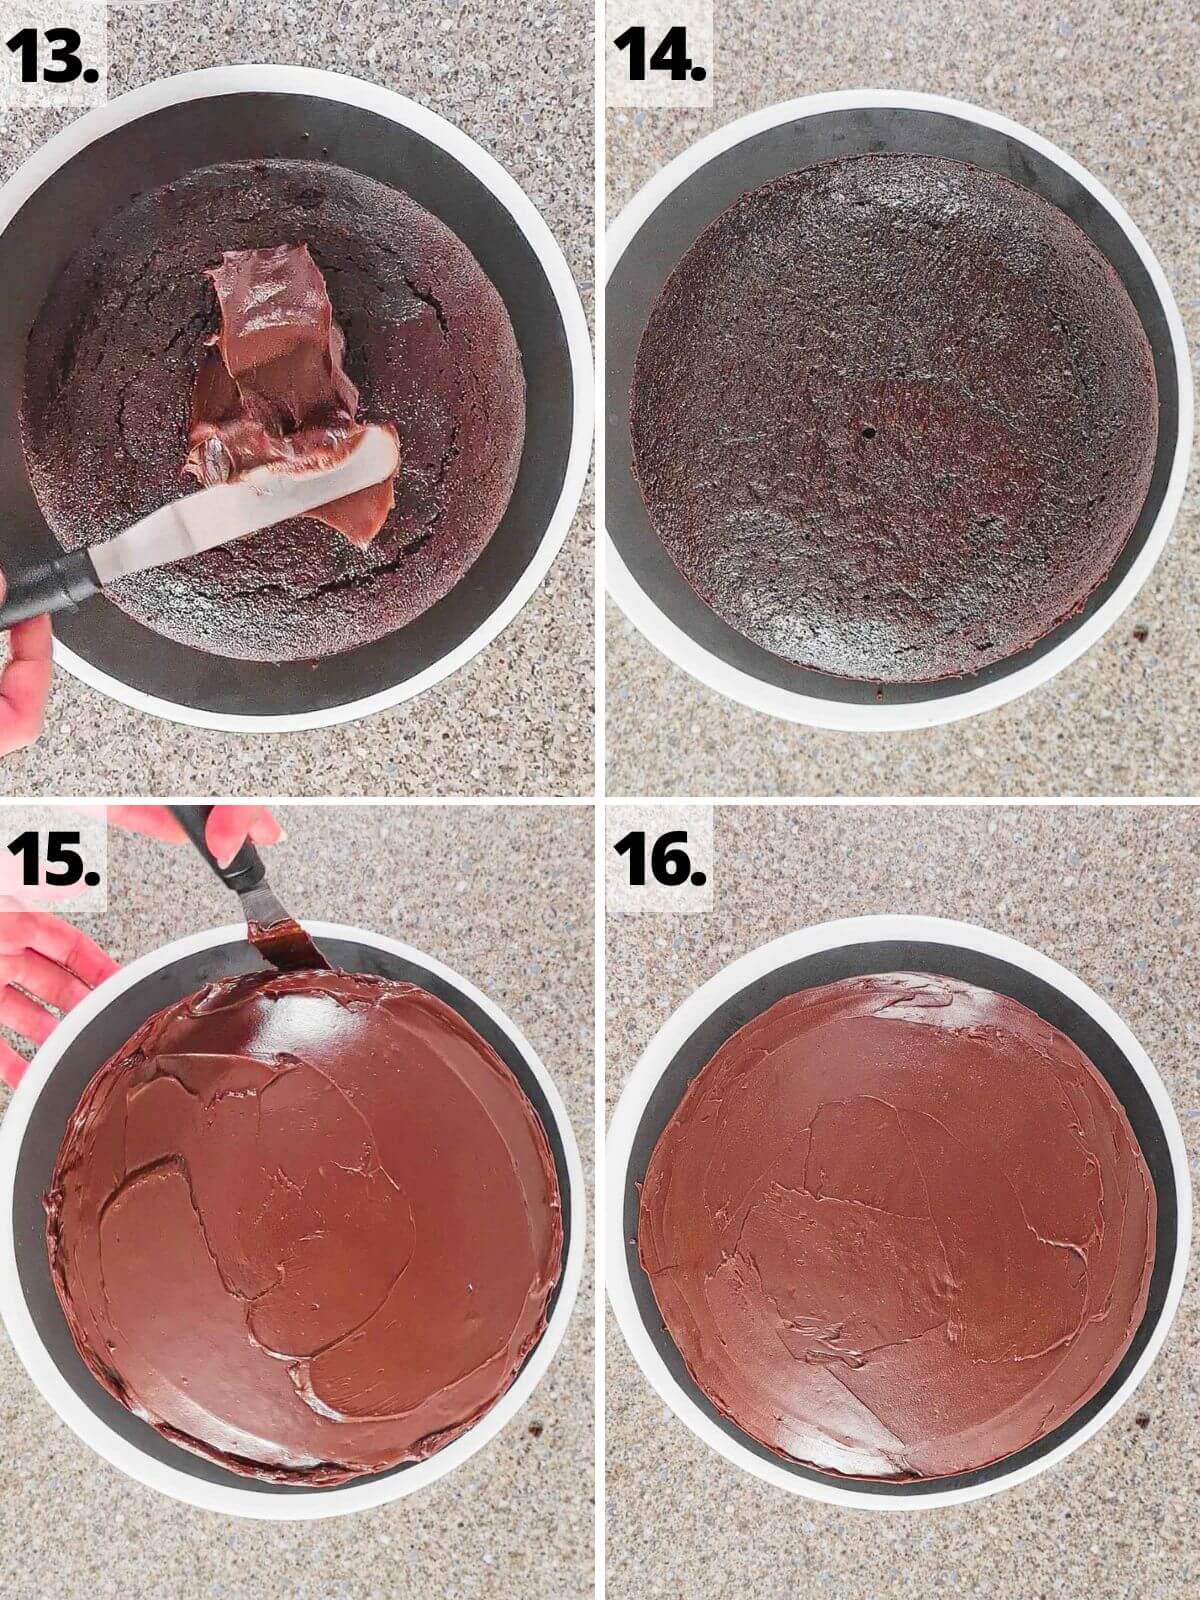 baileys chocolate cake assembly recipe method steps 13 to 16.